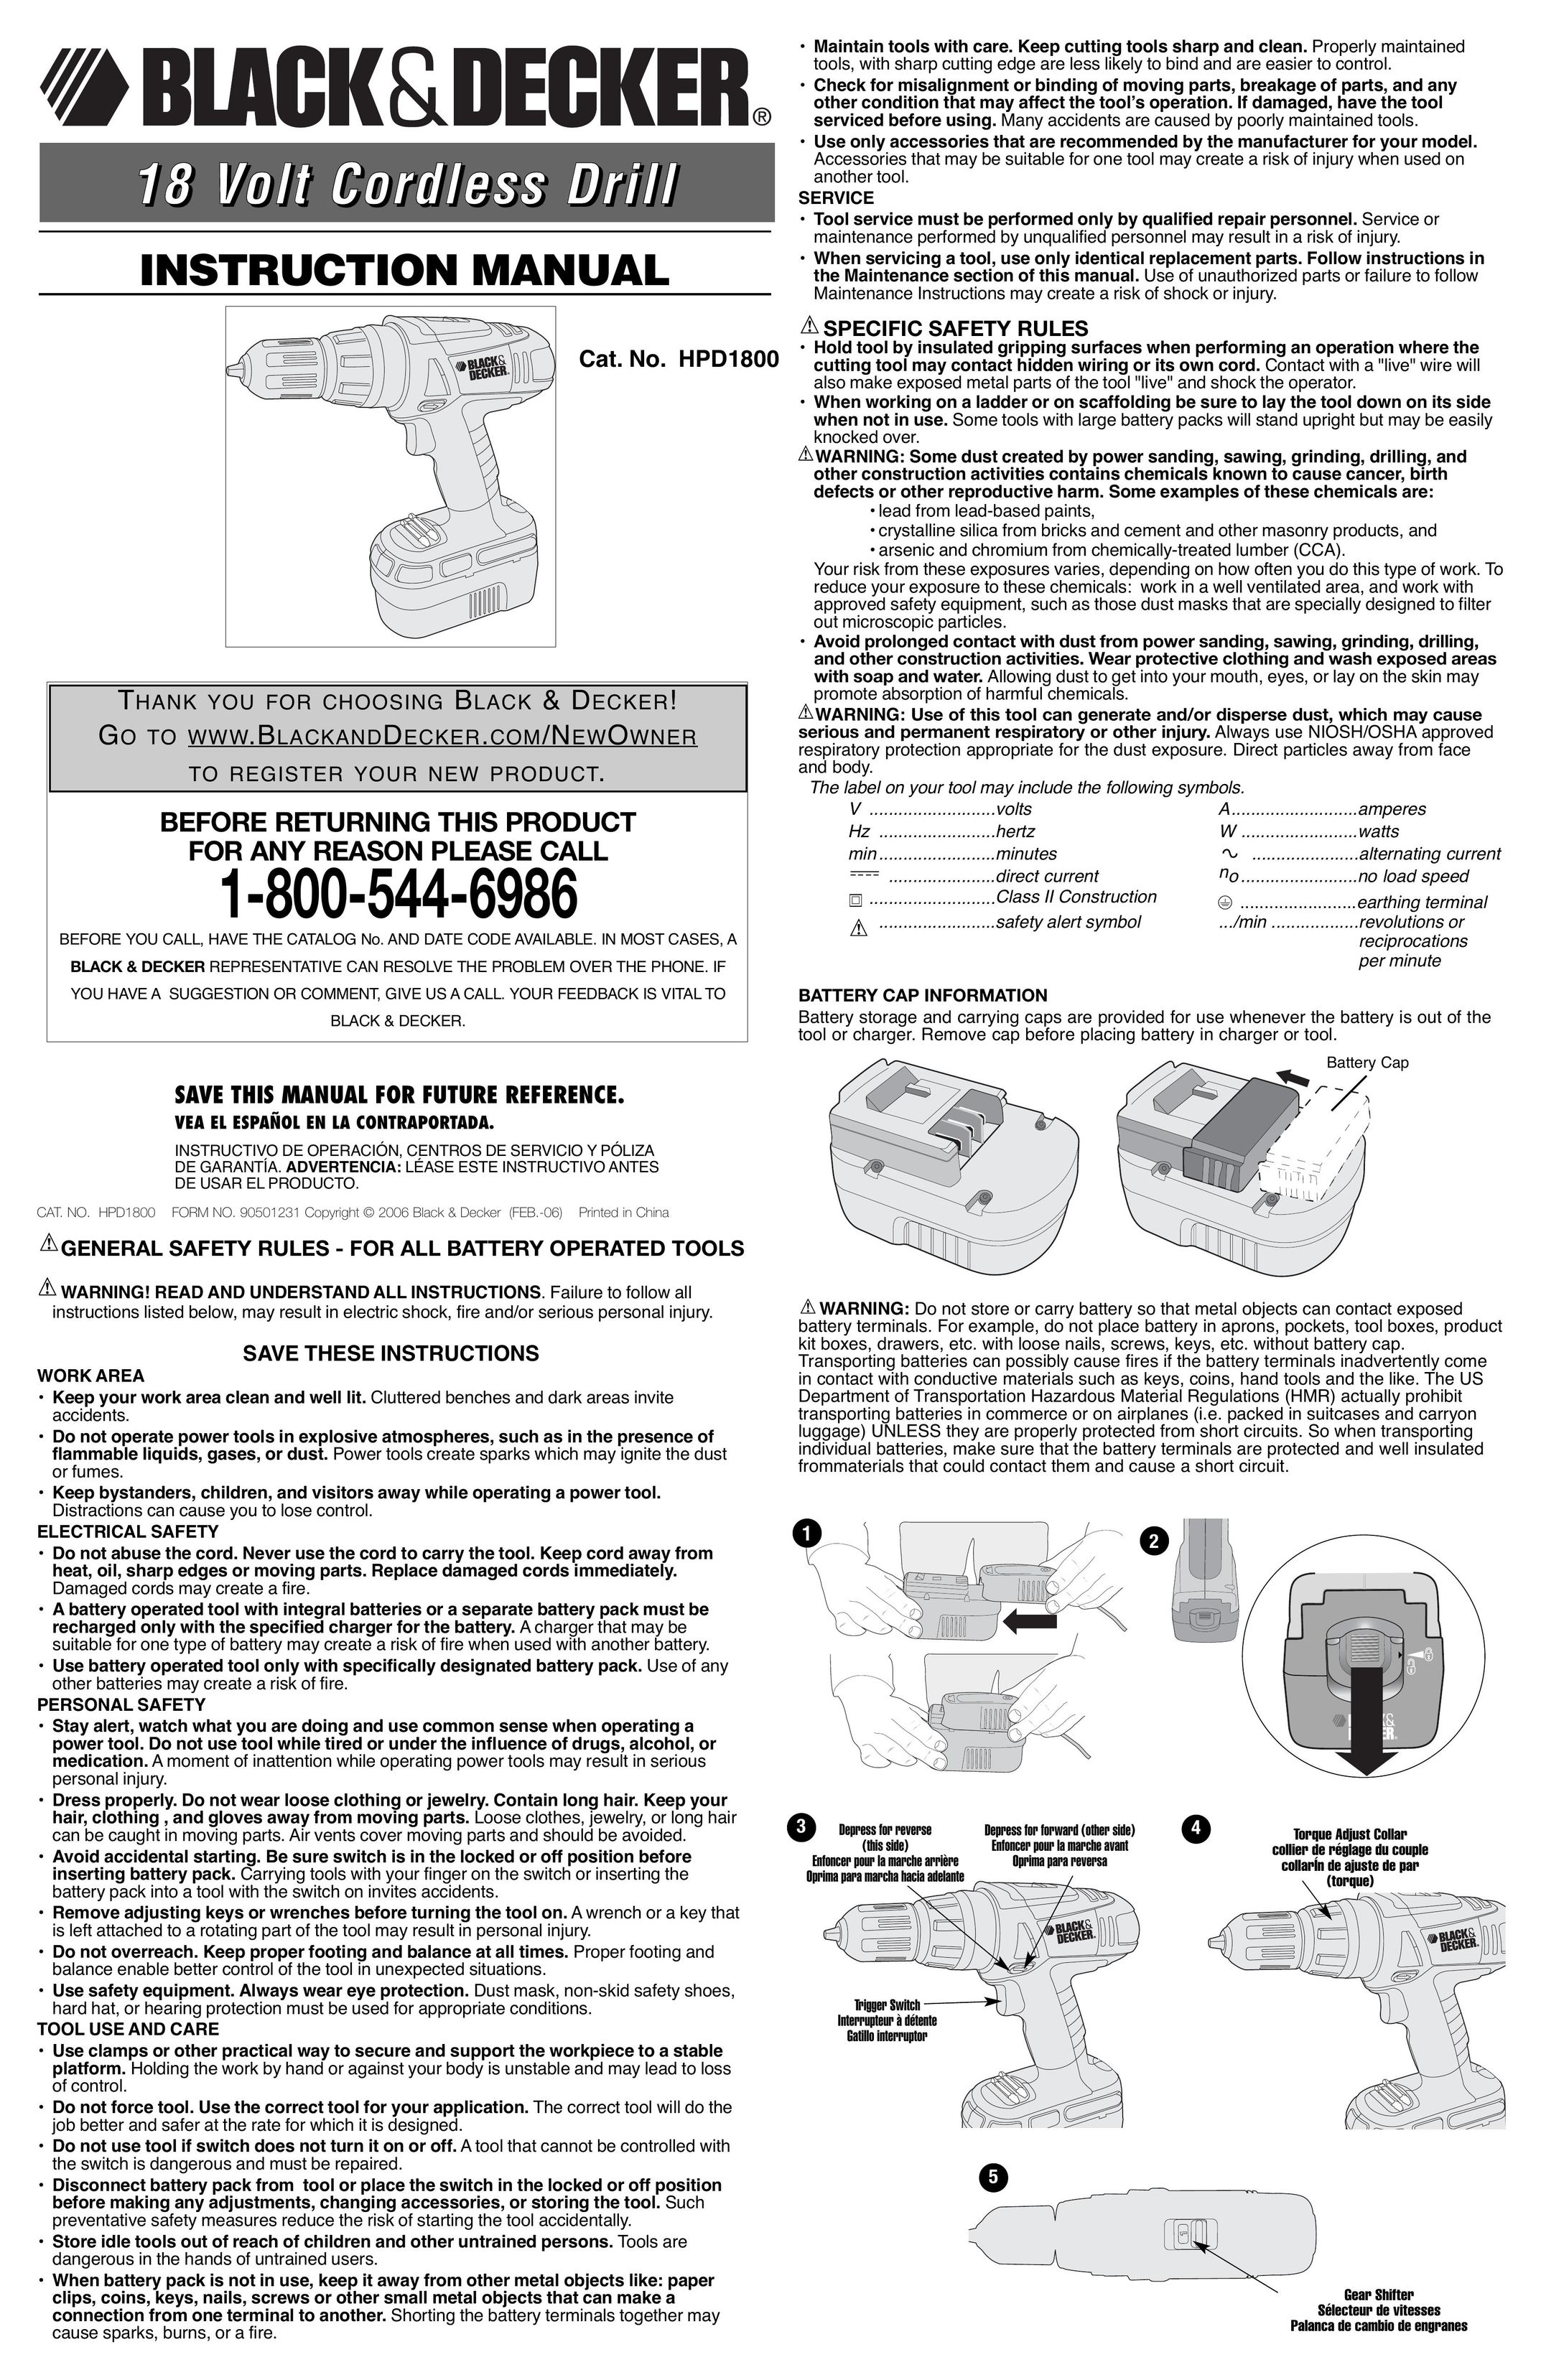 Black & Decker 90501231 Cordless Drill User Manual